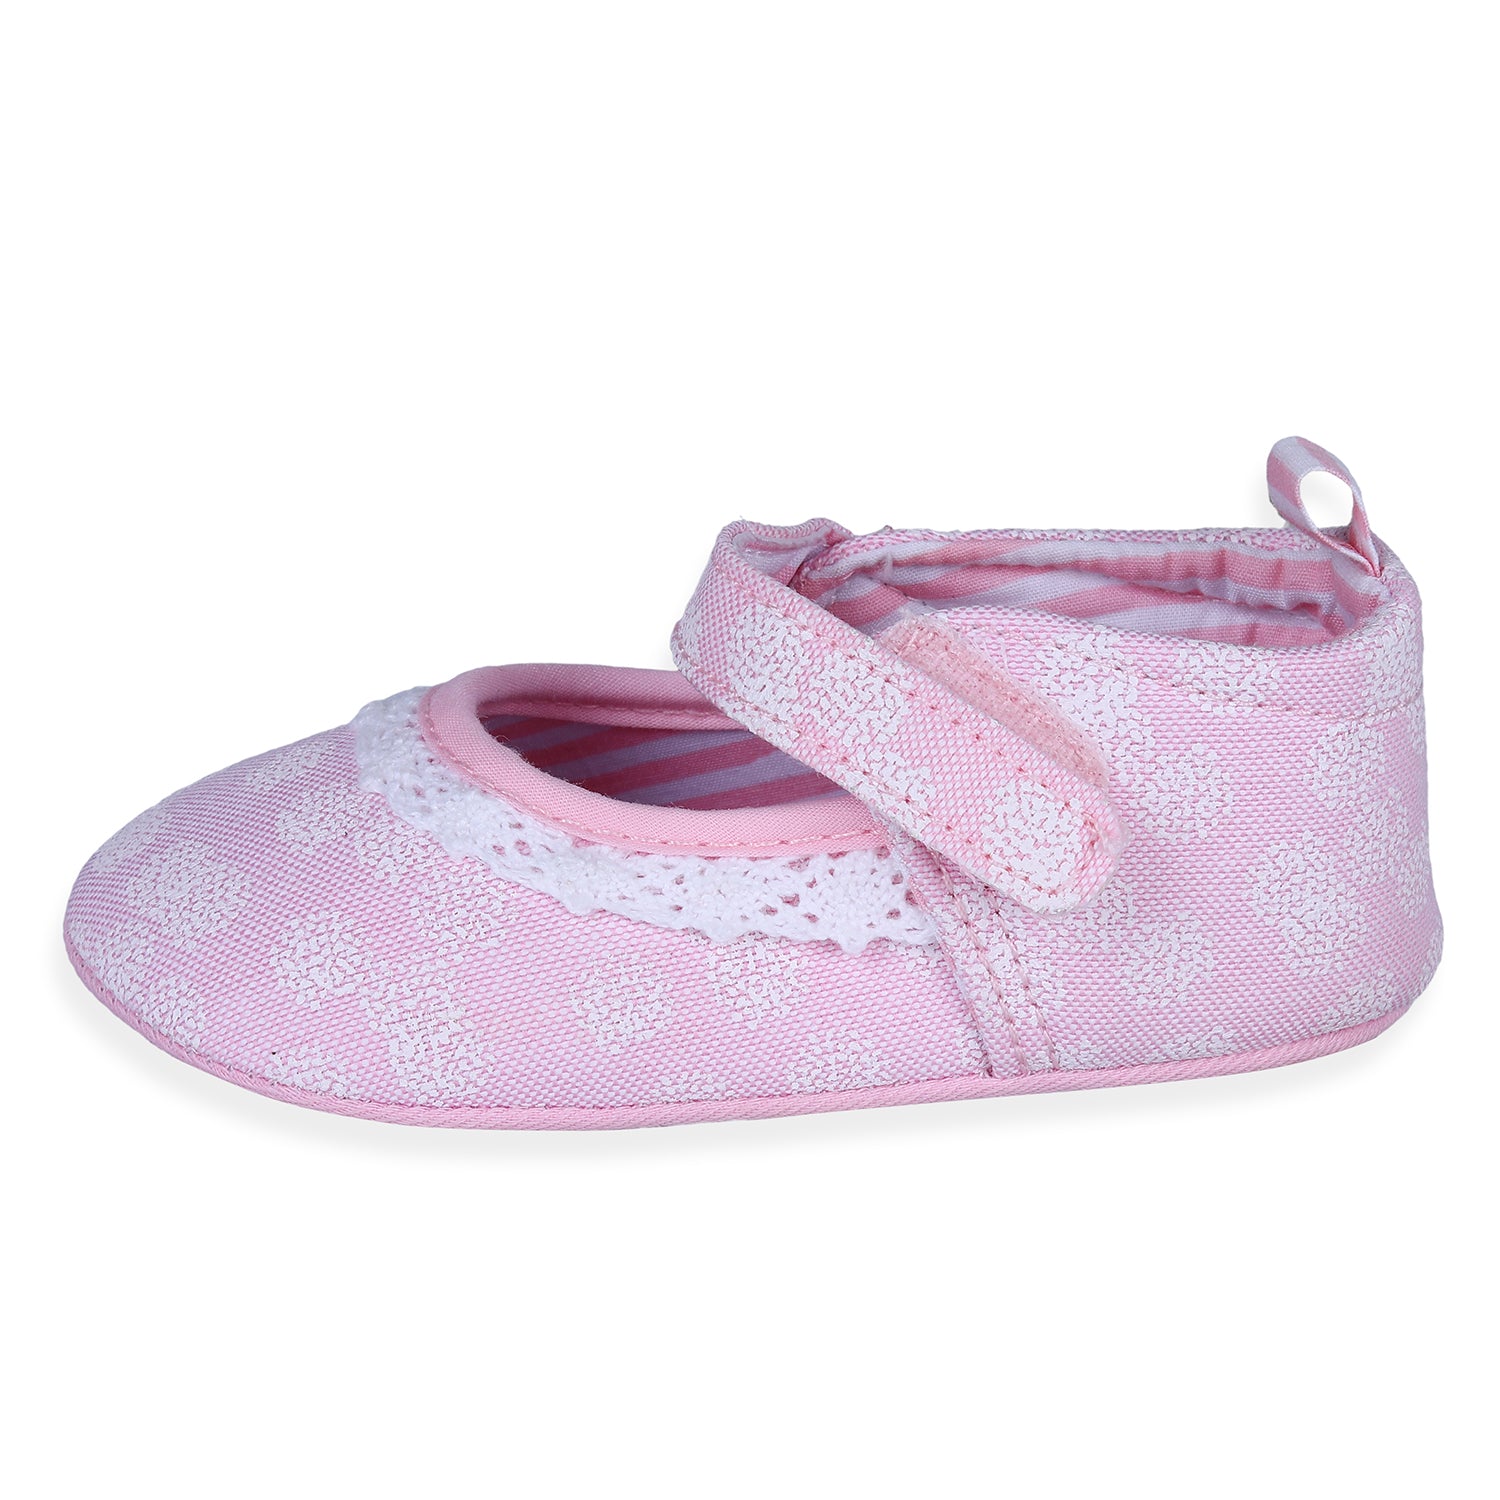 Textured Hookloop Premium Girls Anti-Slip Ballerina Shoes - Pink - Baby Moo